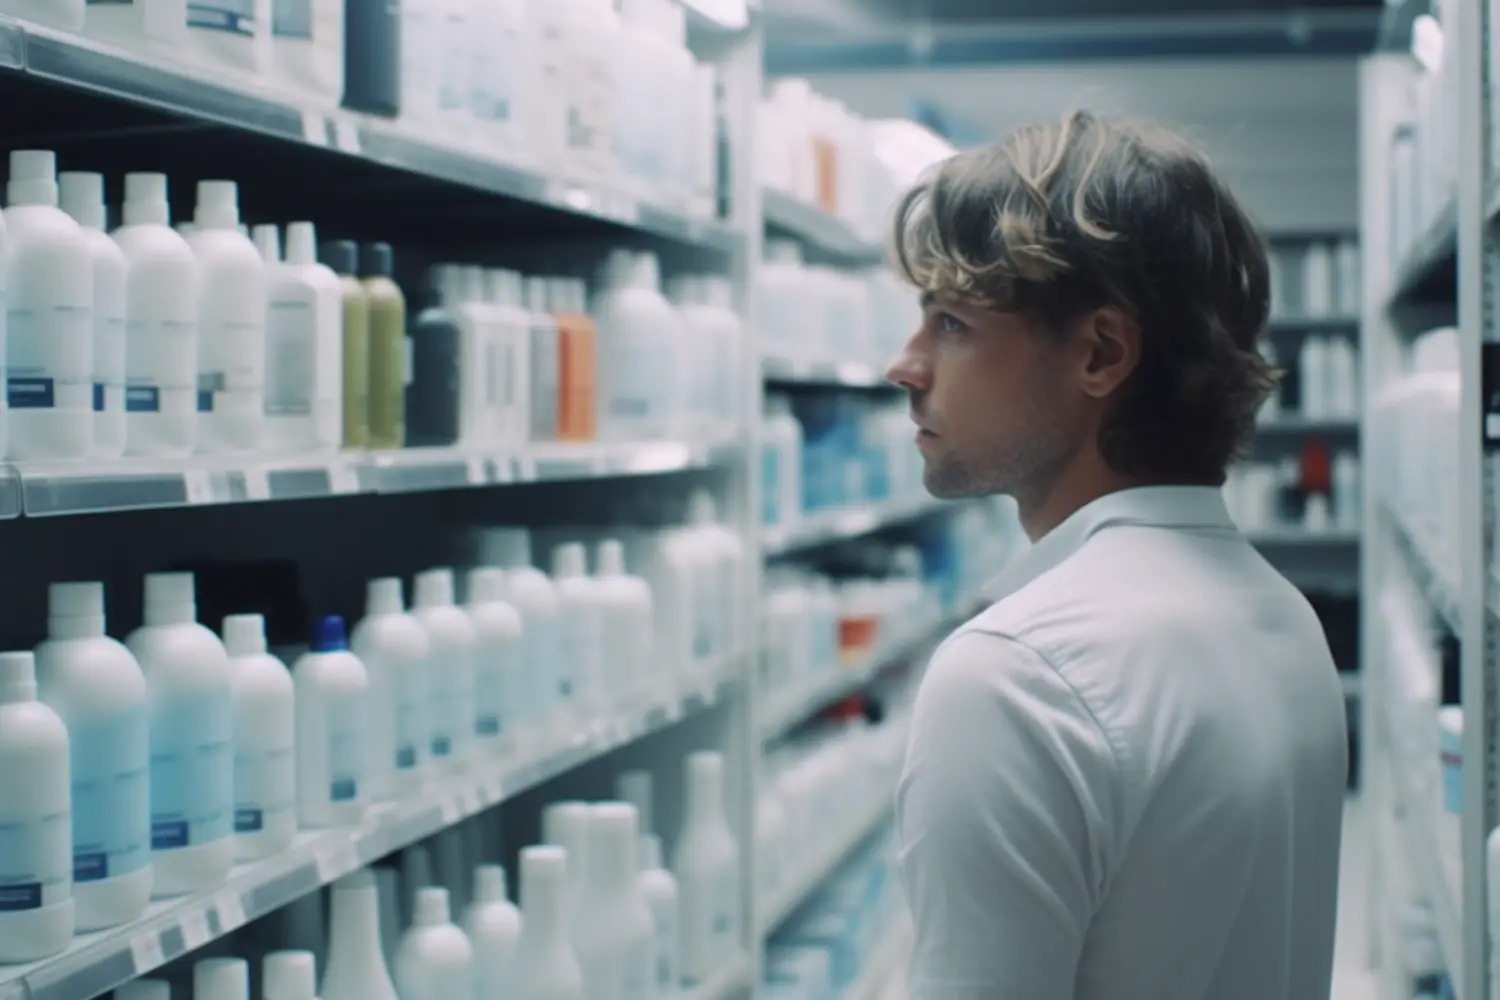 man looking at shampoo bottles on shelf